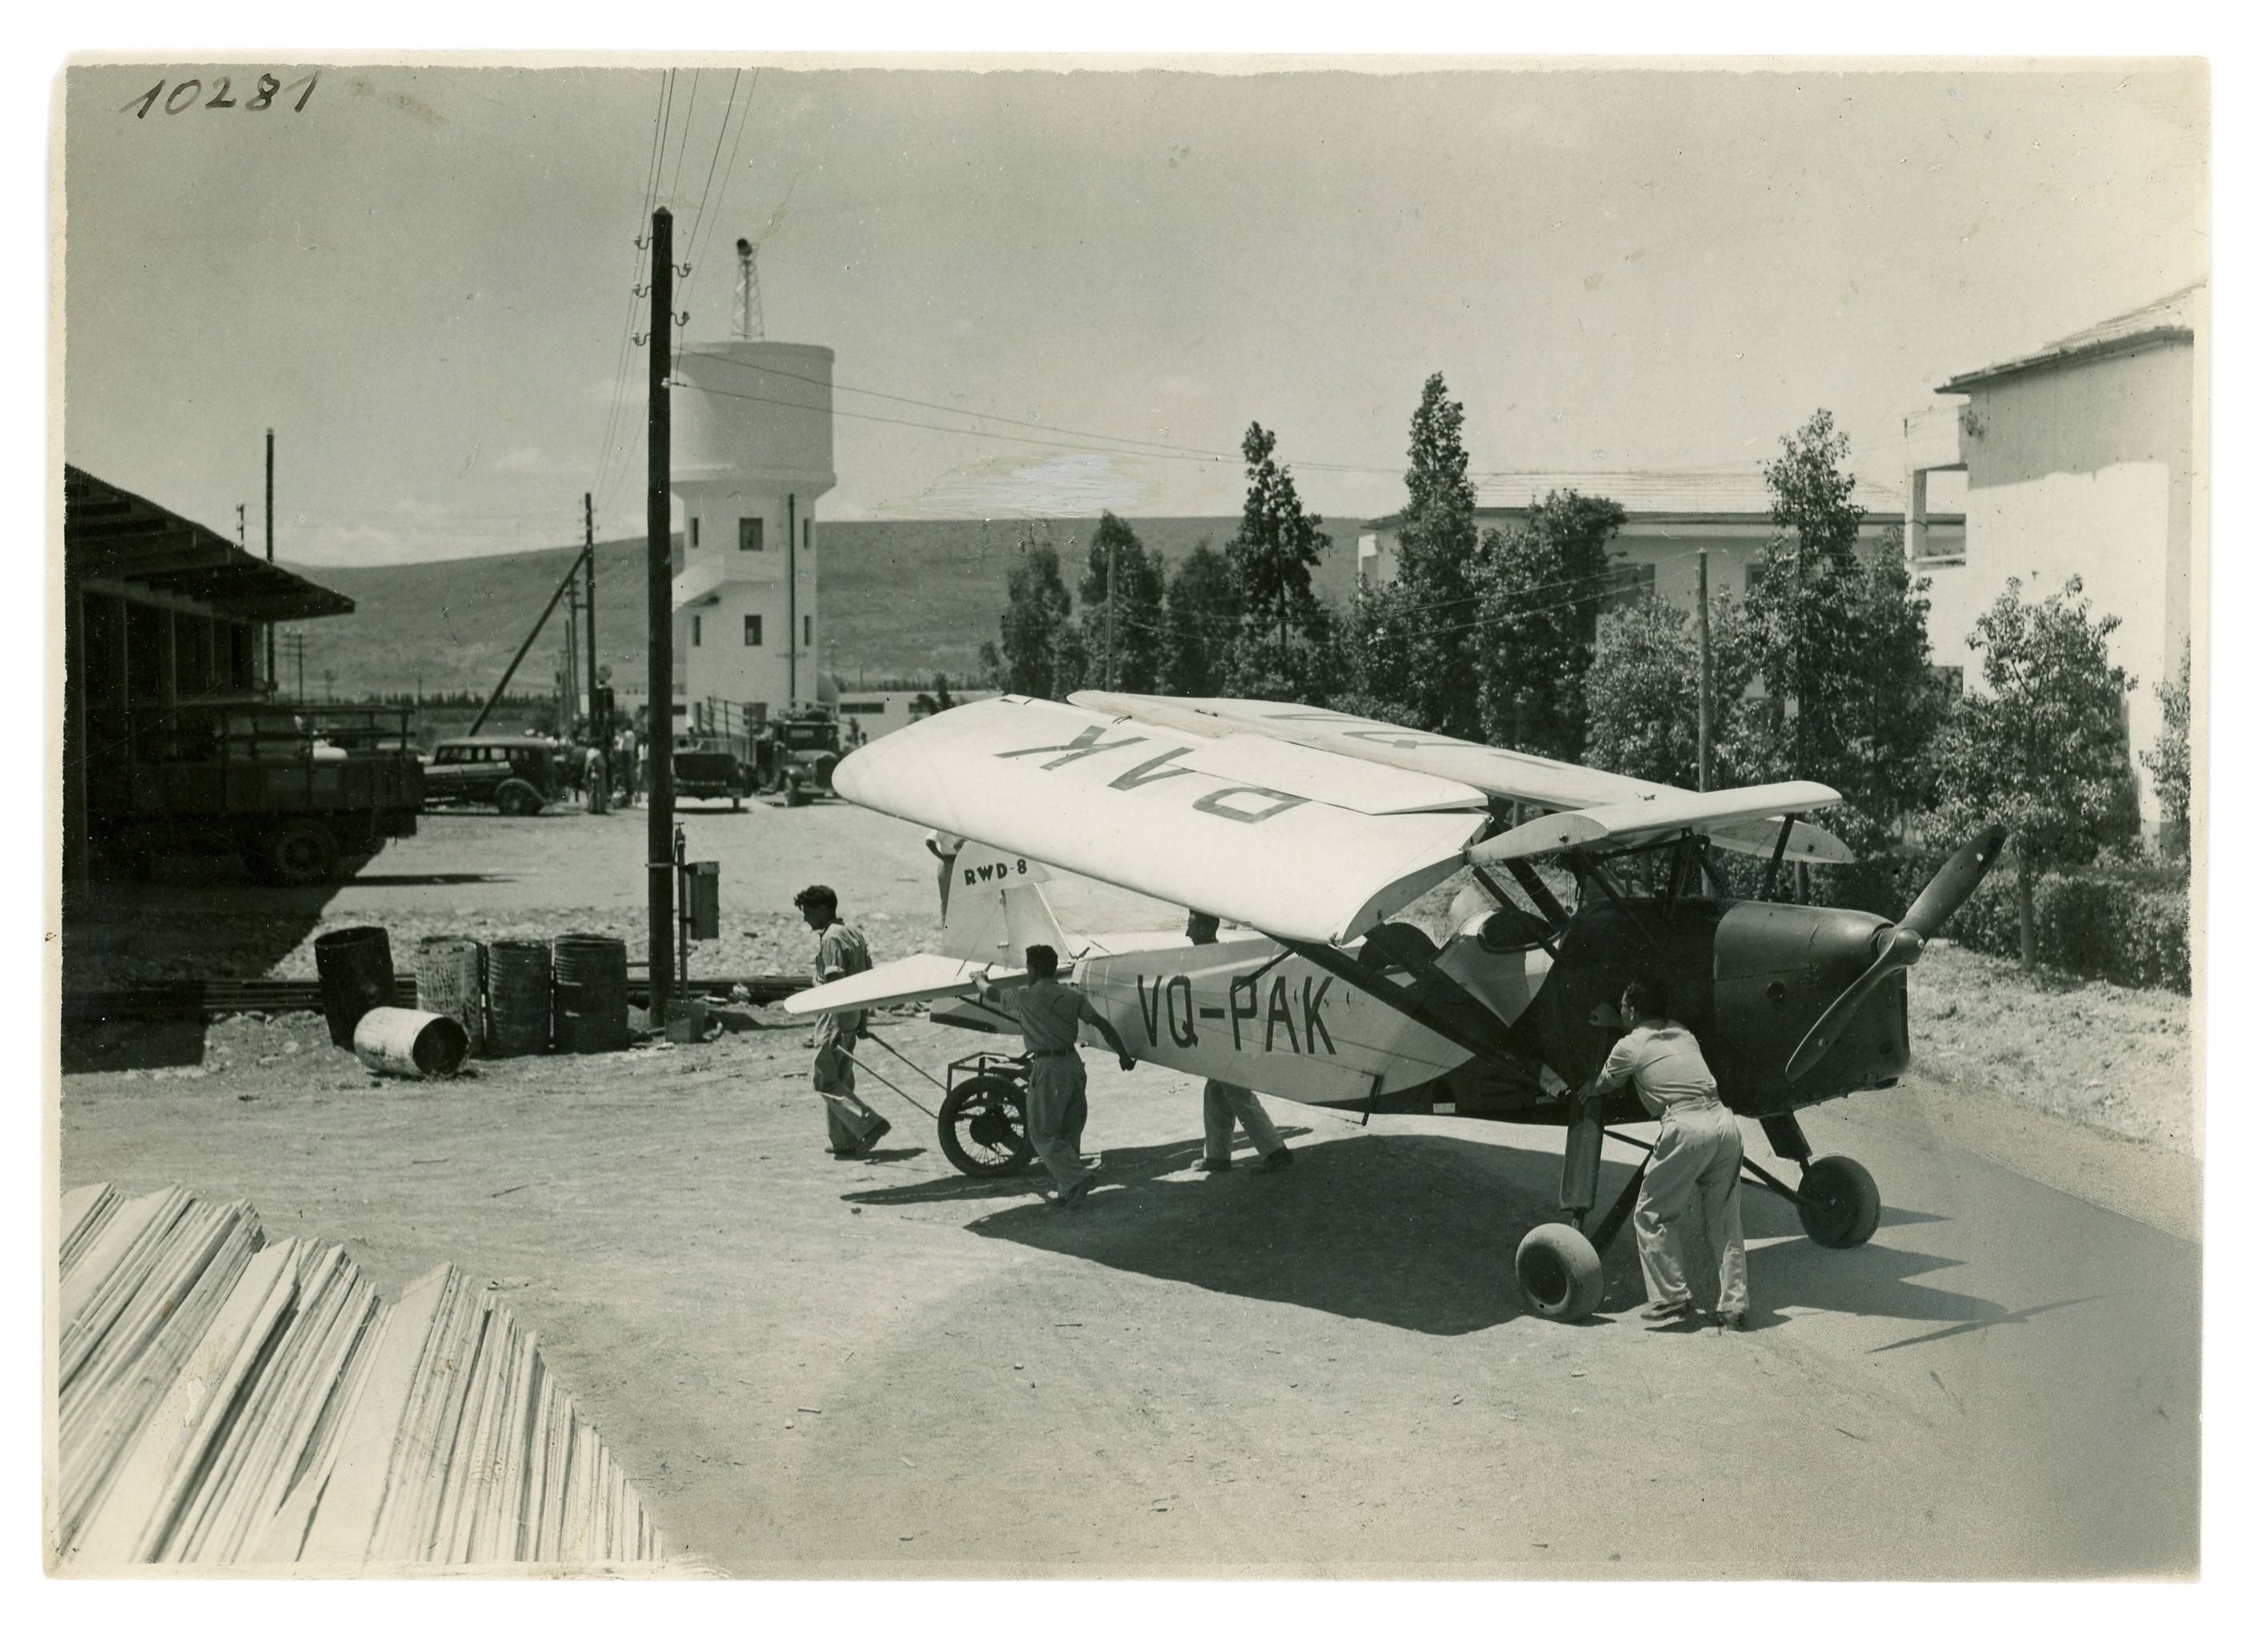 Aviation in Palestine by Zoltan Kluger, 1939